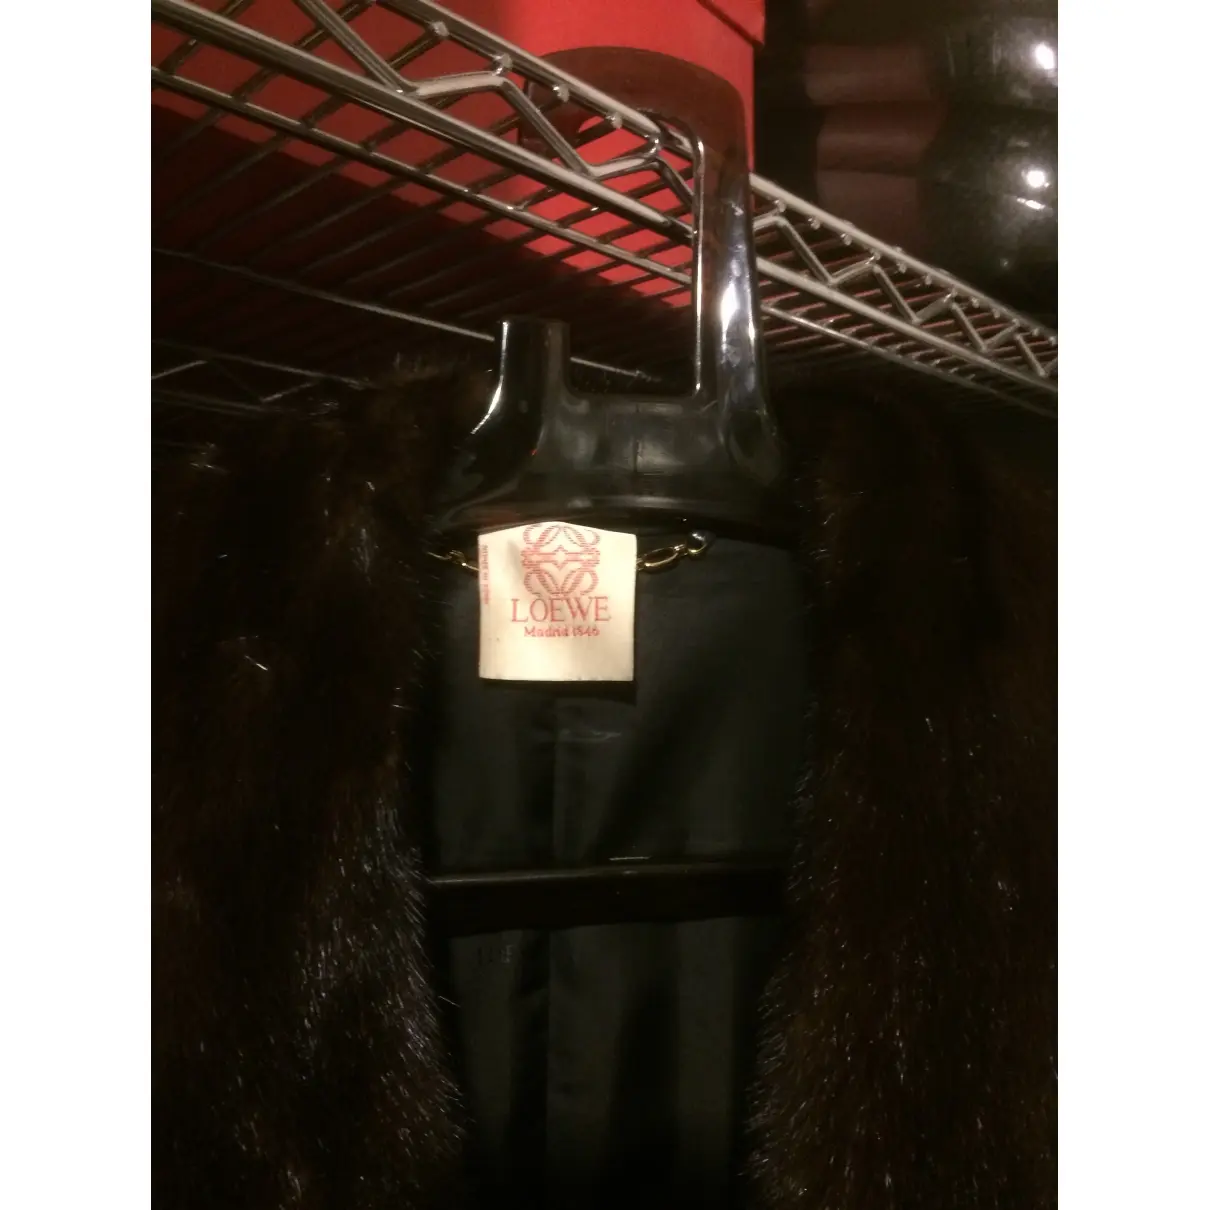 Loewe Leather coat for sale - Vintage